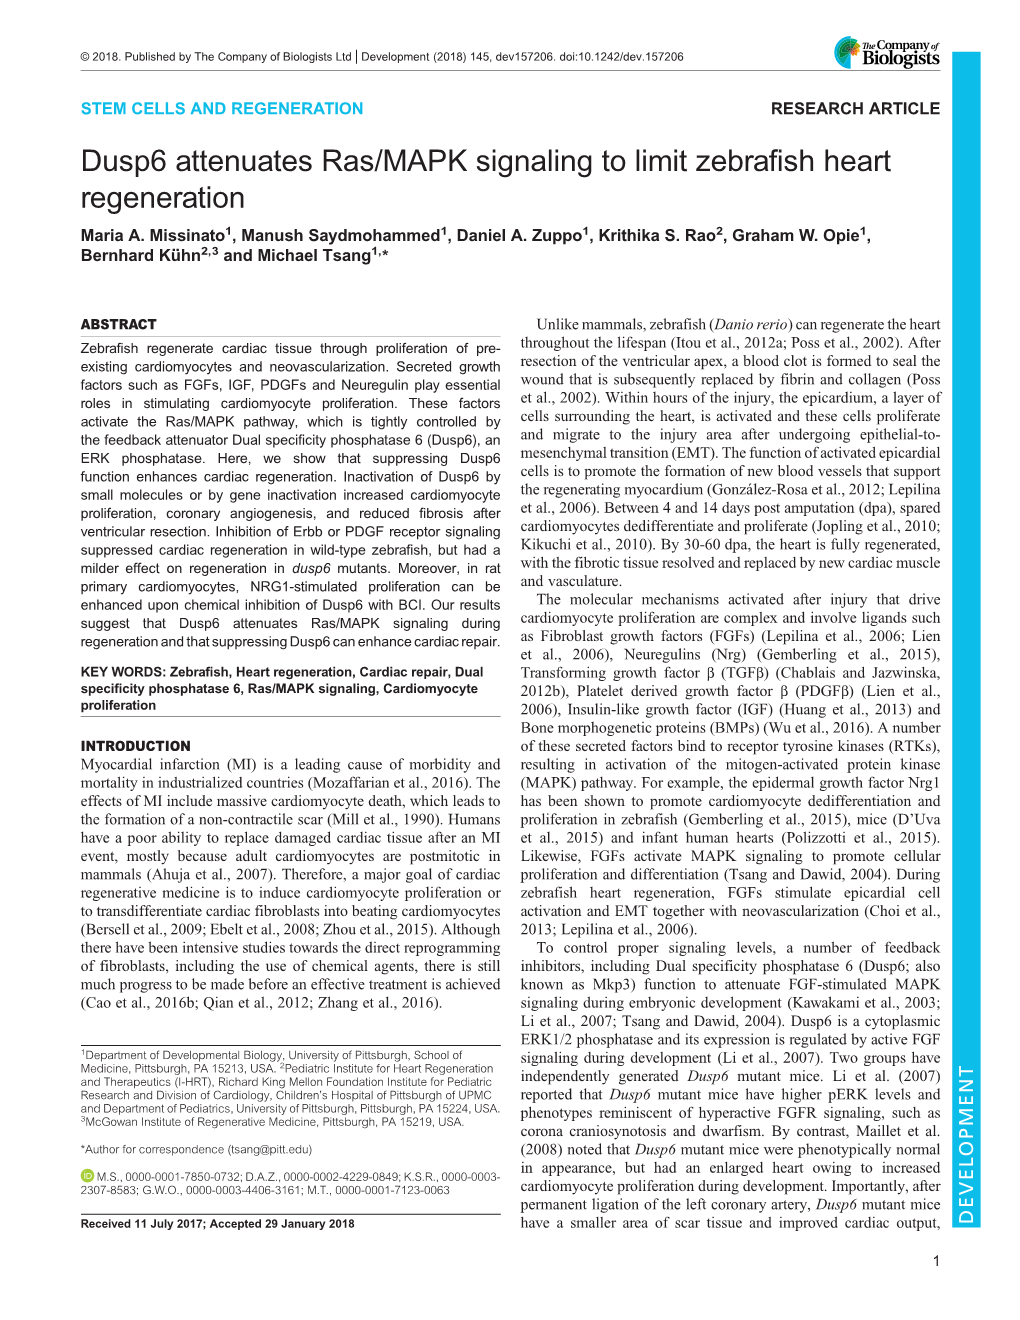 Dusp6 Attenuates Ras/MAPK Signaling to Limit Zebrafish Heart Regeneration Maria A